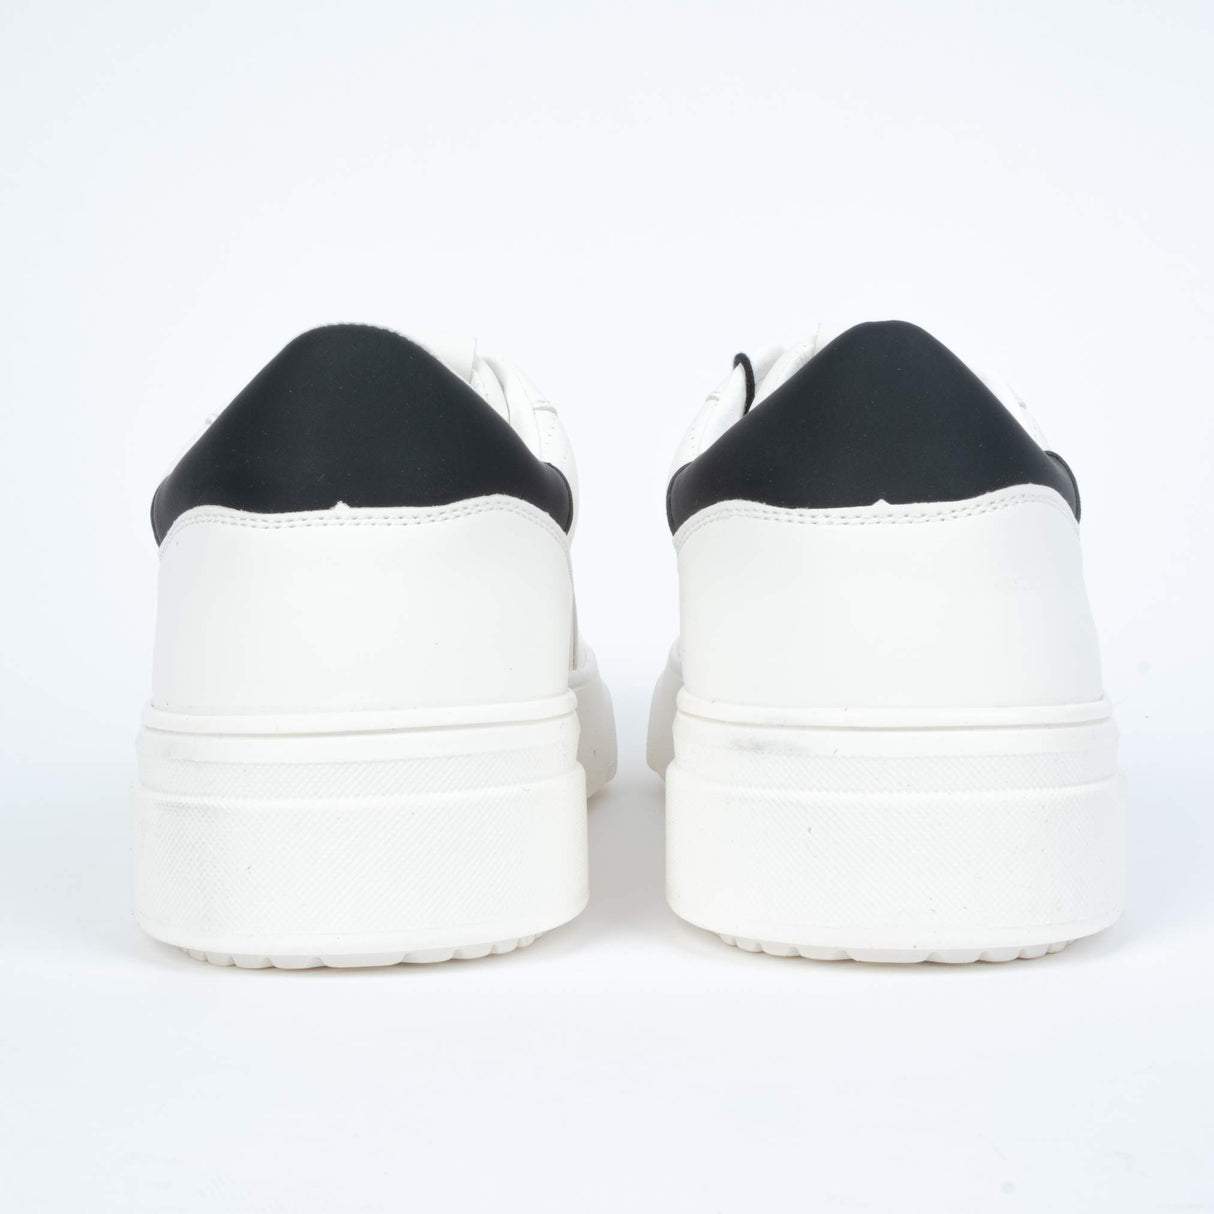 ICON Sneakers IC03657 Bianco